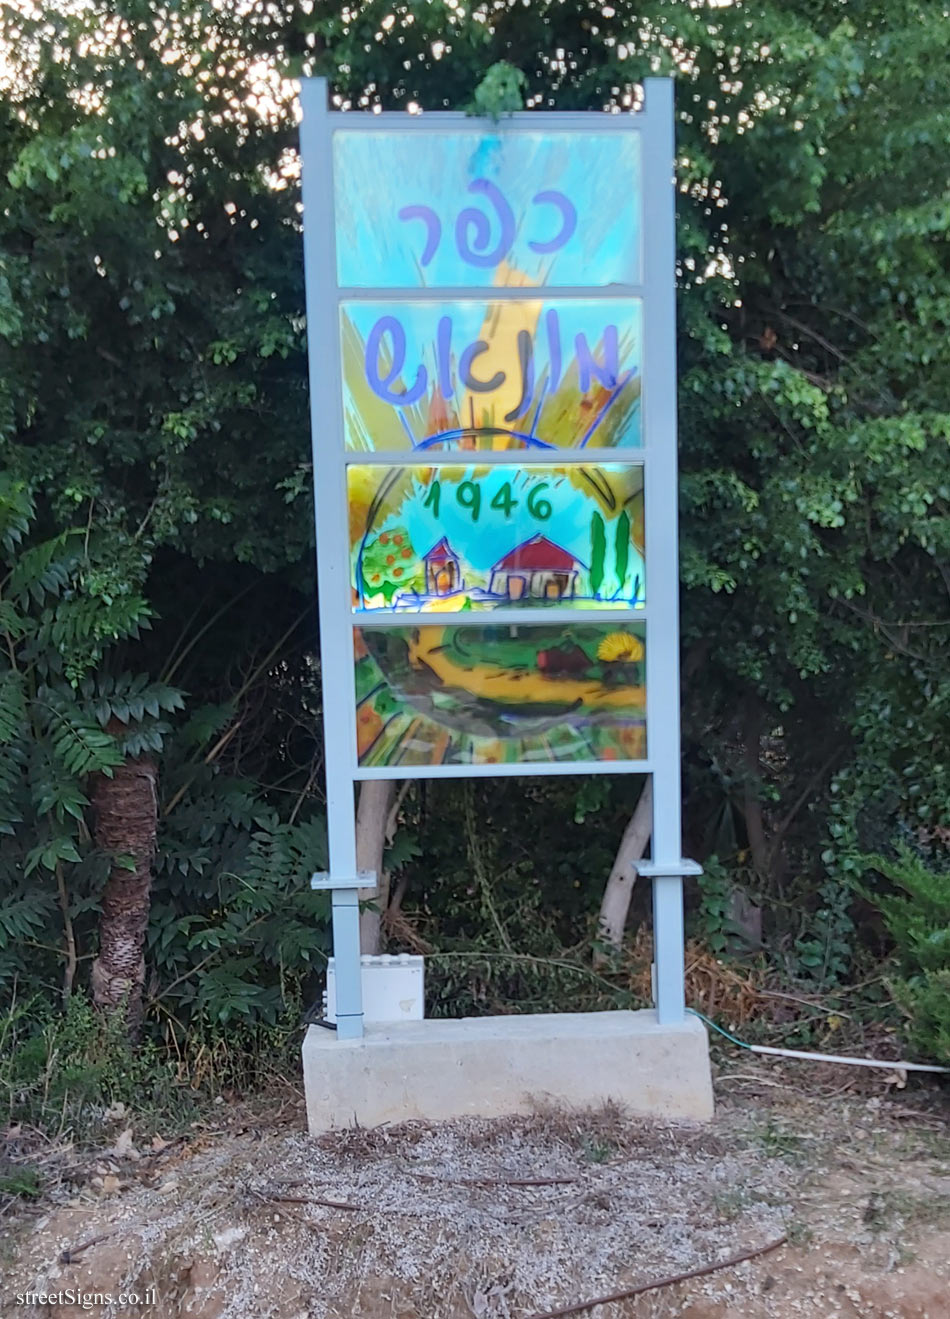 Kfar Monash - the entrance sign to the moshav